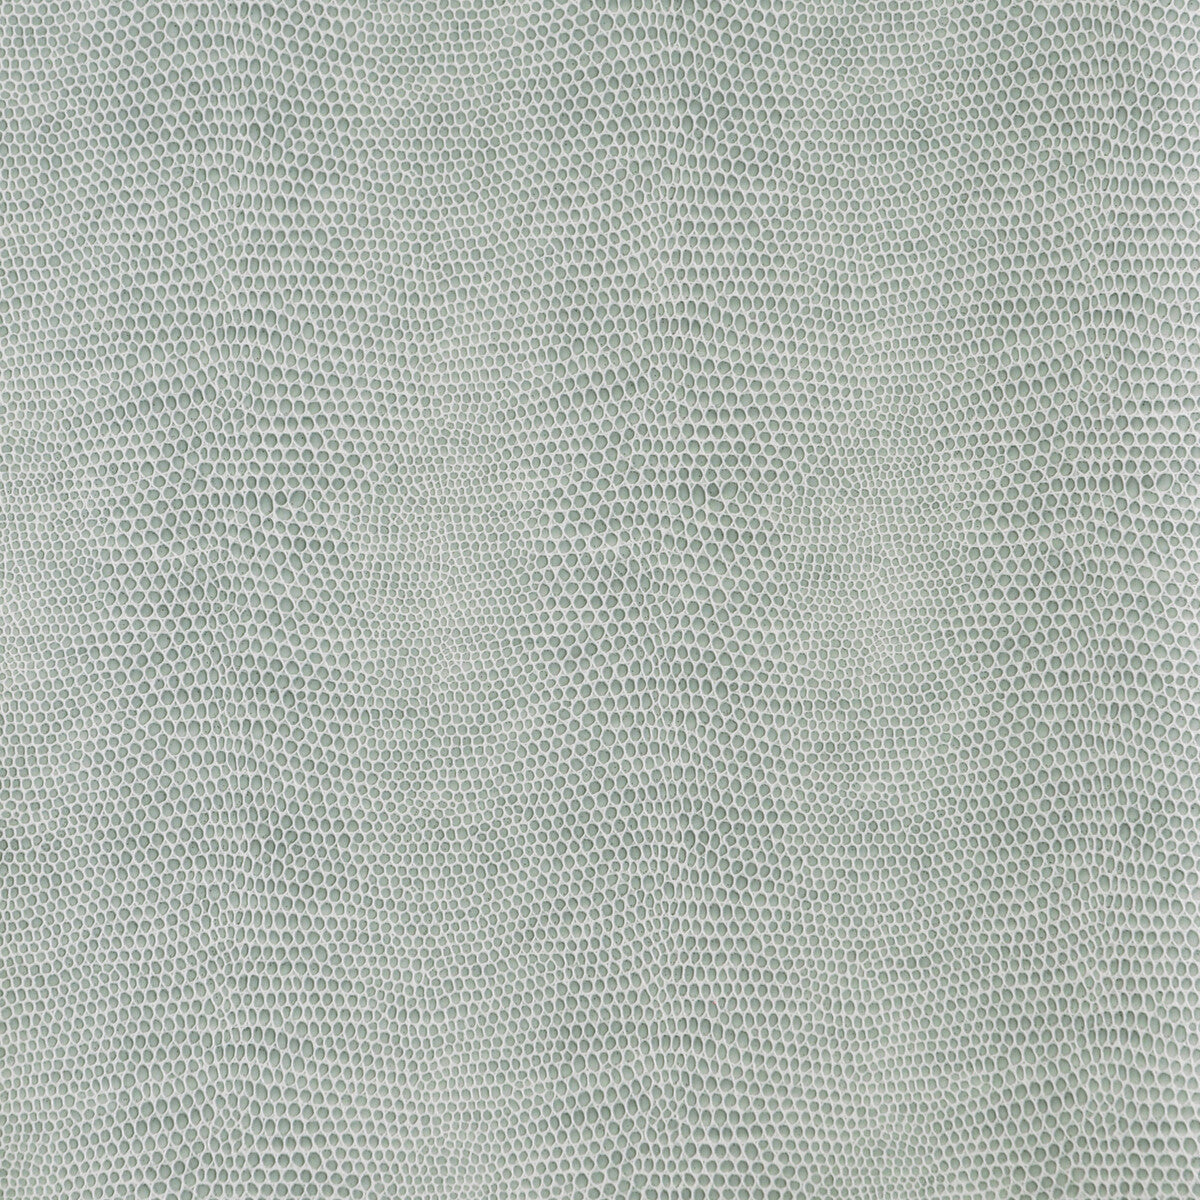 Kravet Design fabric in derek-515 color - pattern DEREK.515.0 - by Kravet Design